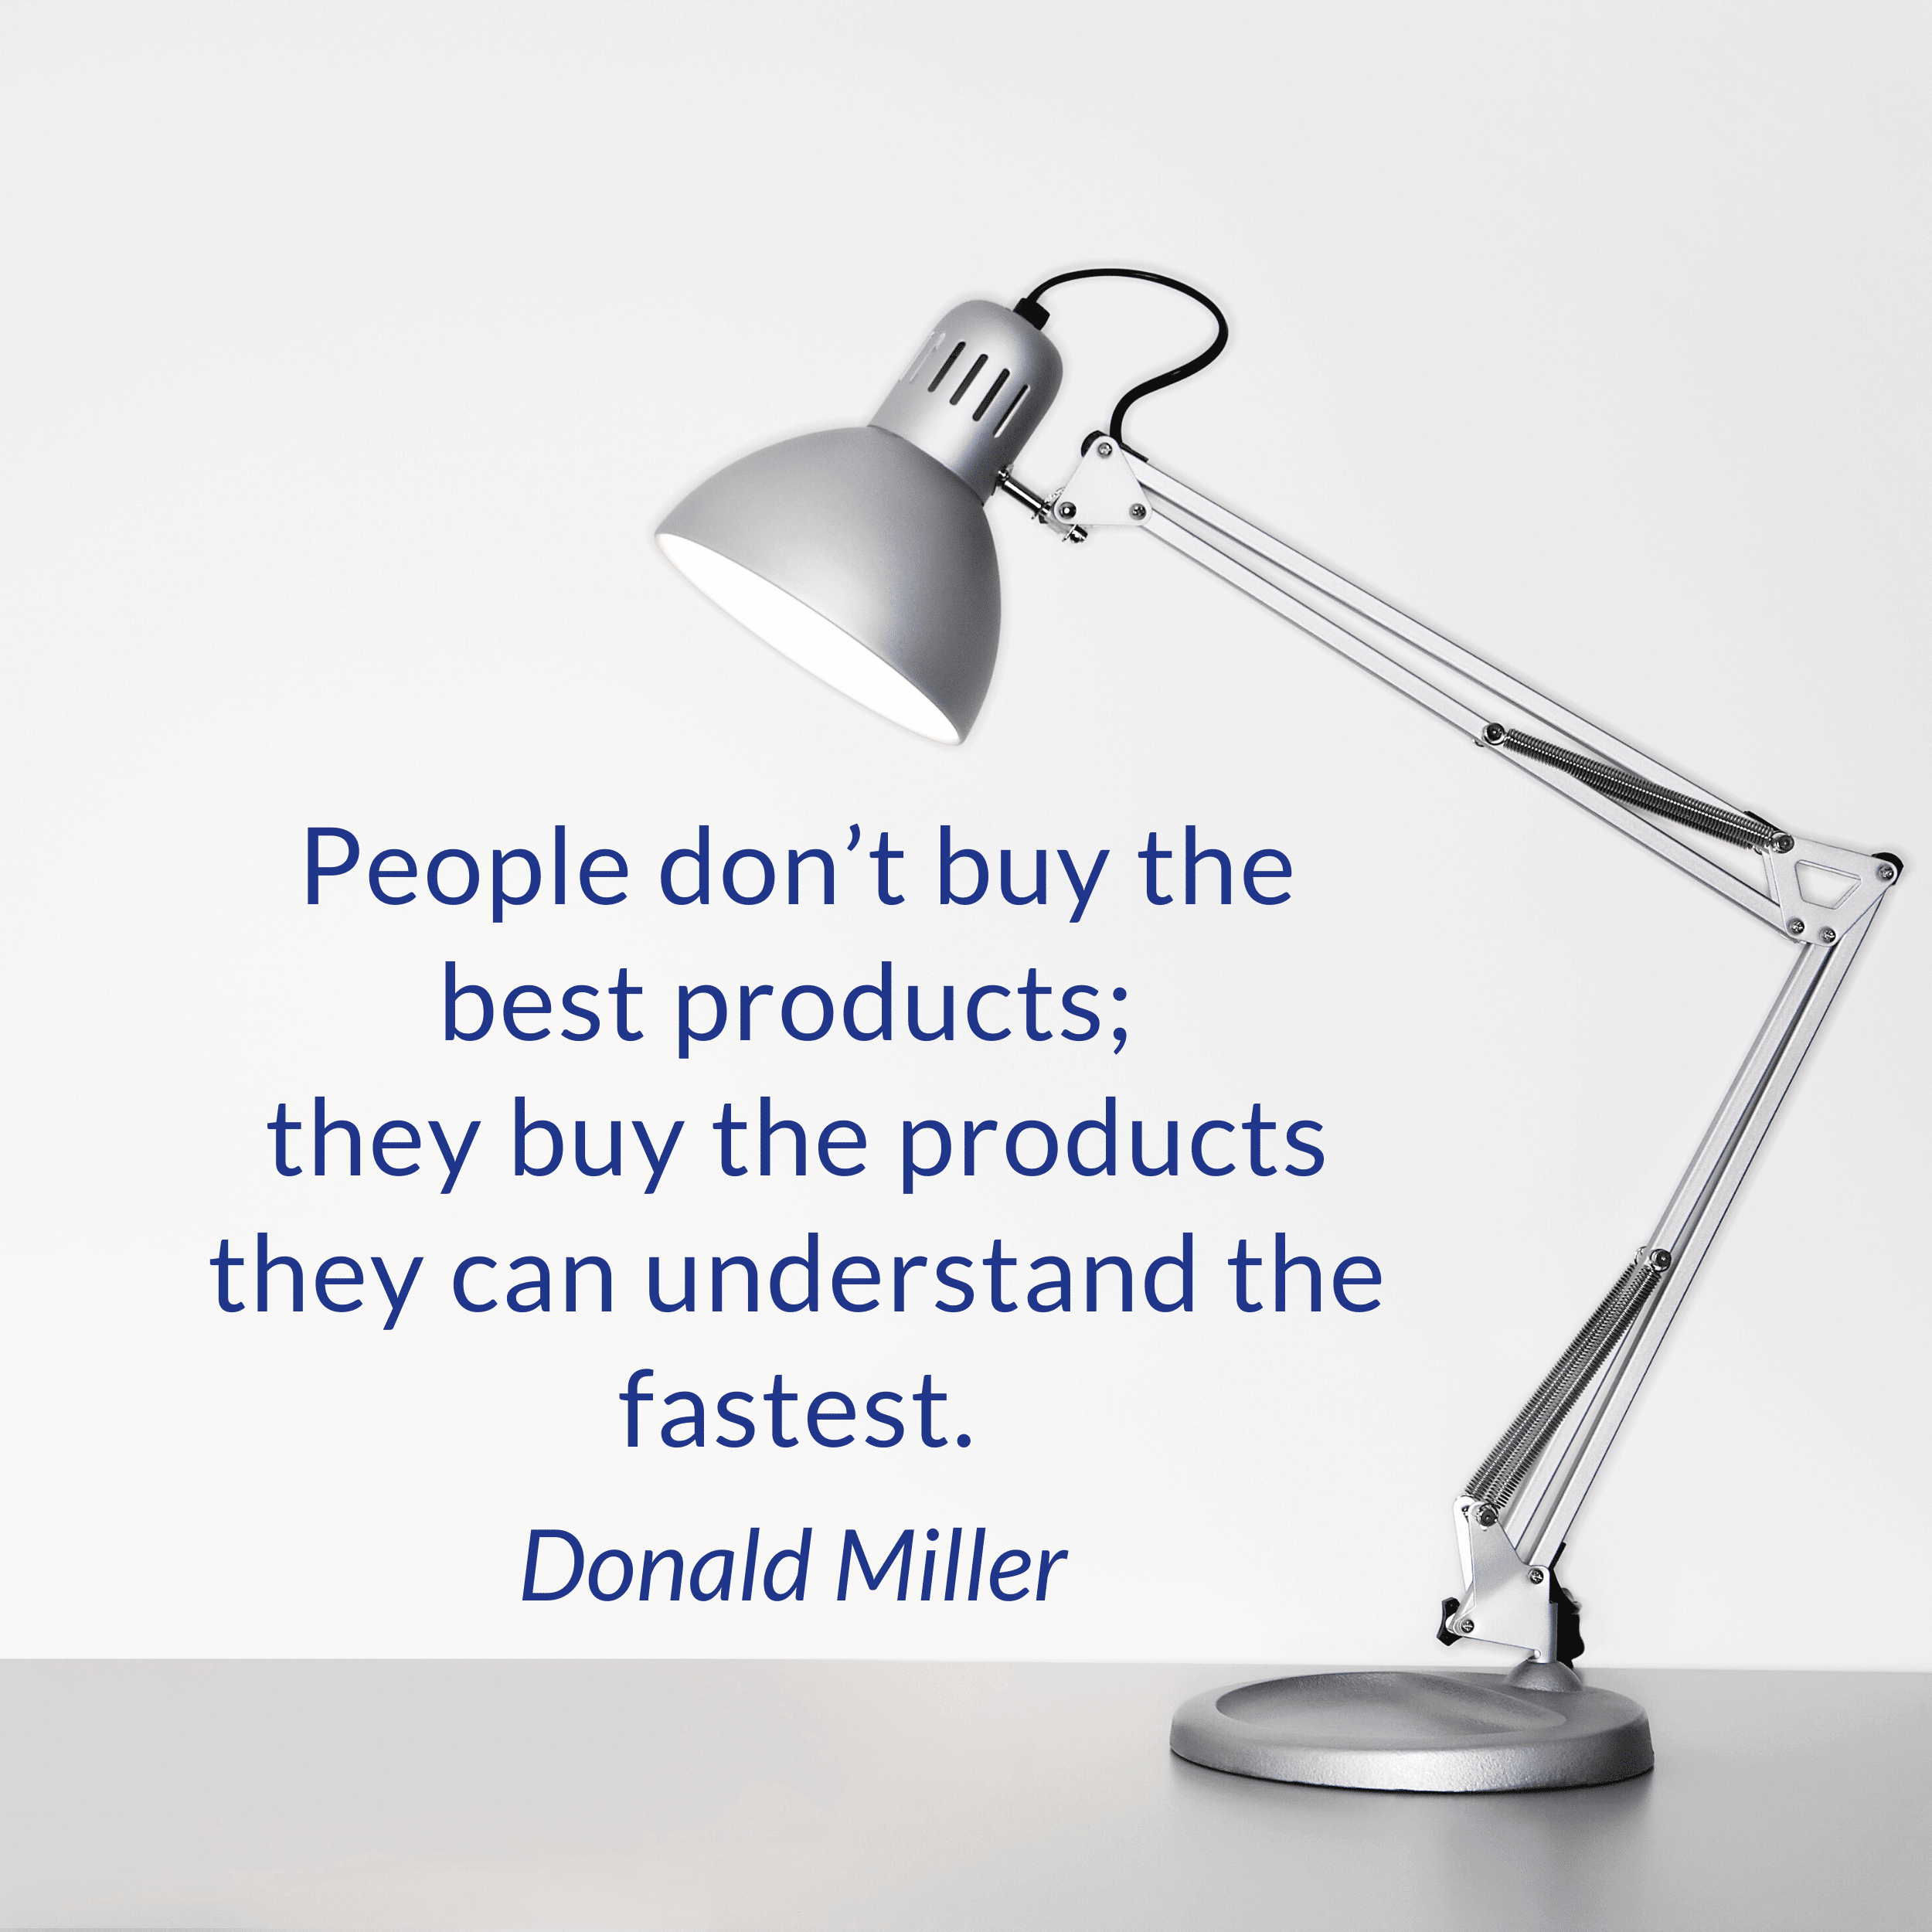 Donald Miller quote.